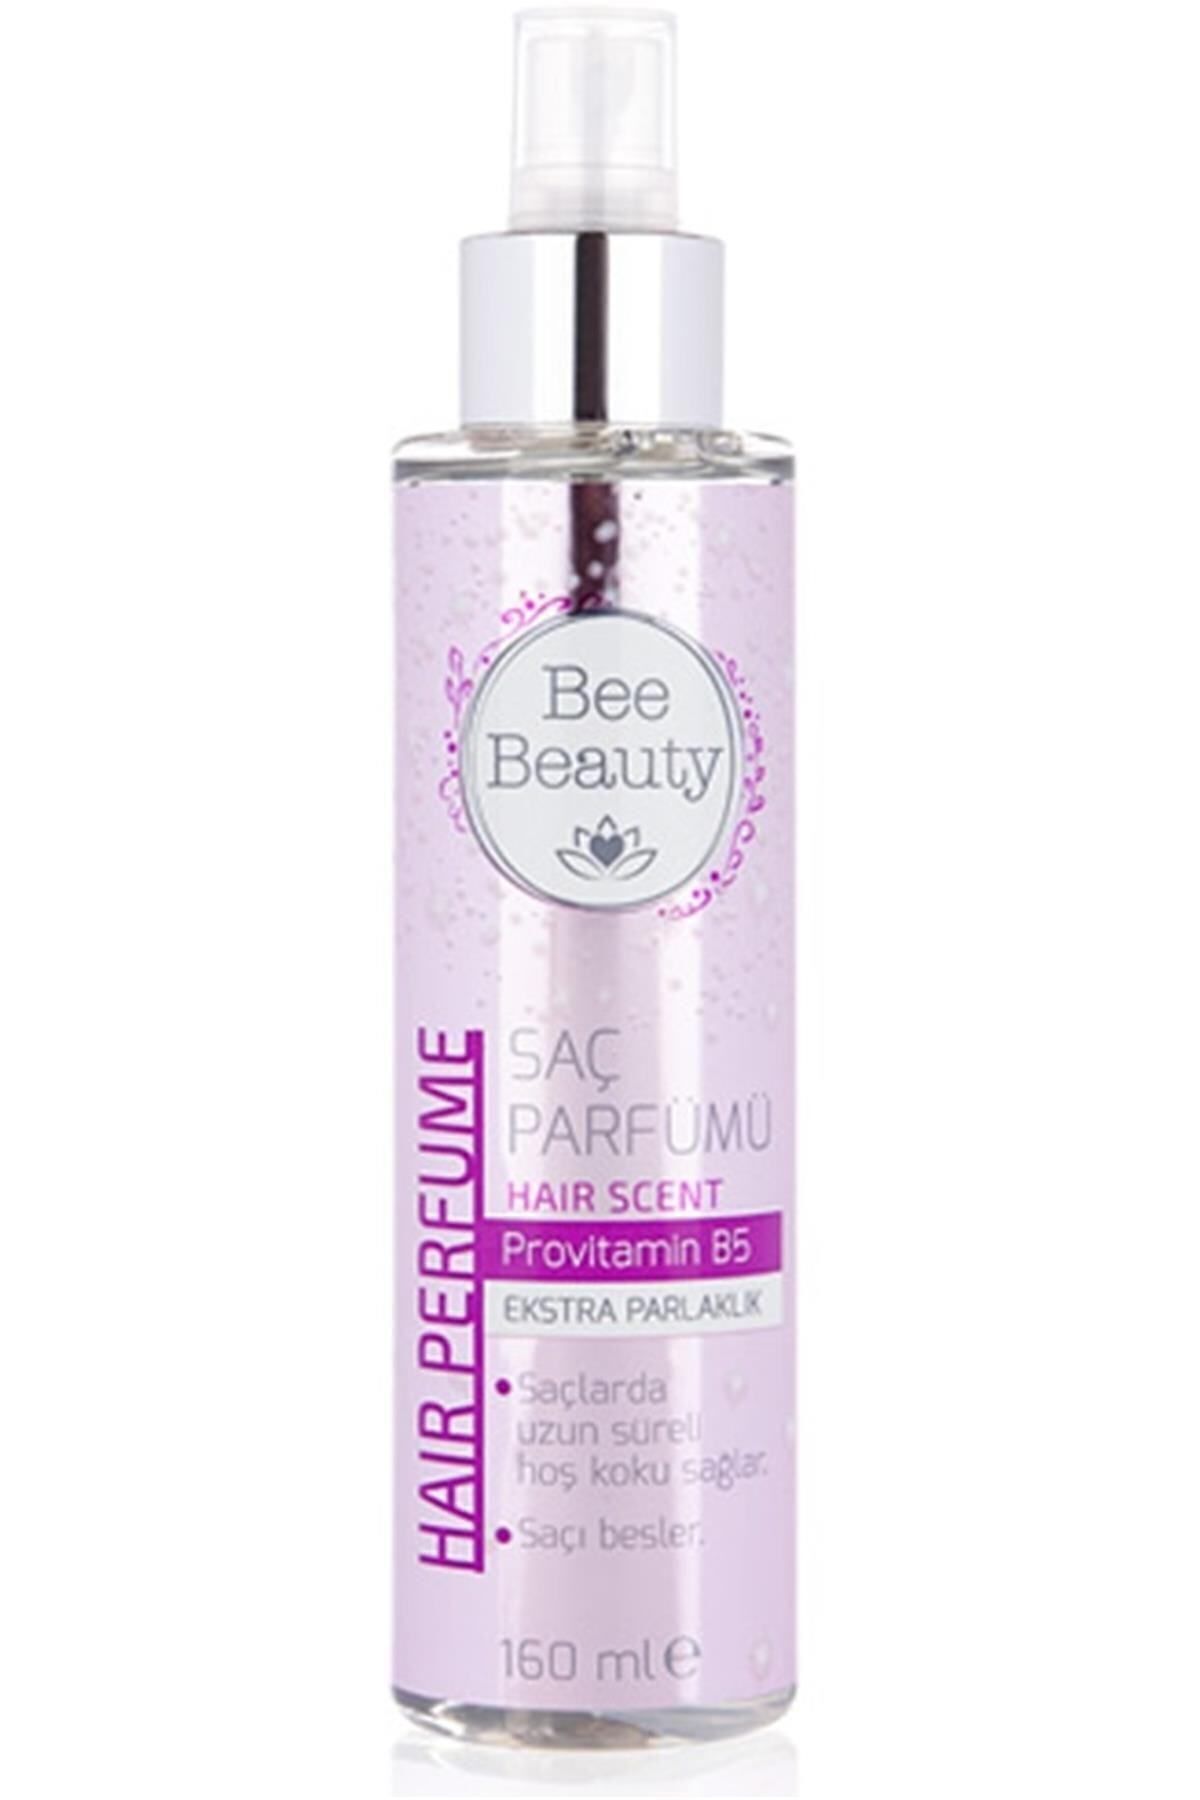 Bee Beauty Saç Parfümü 160 ml